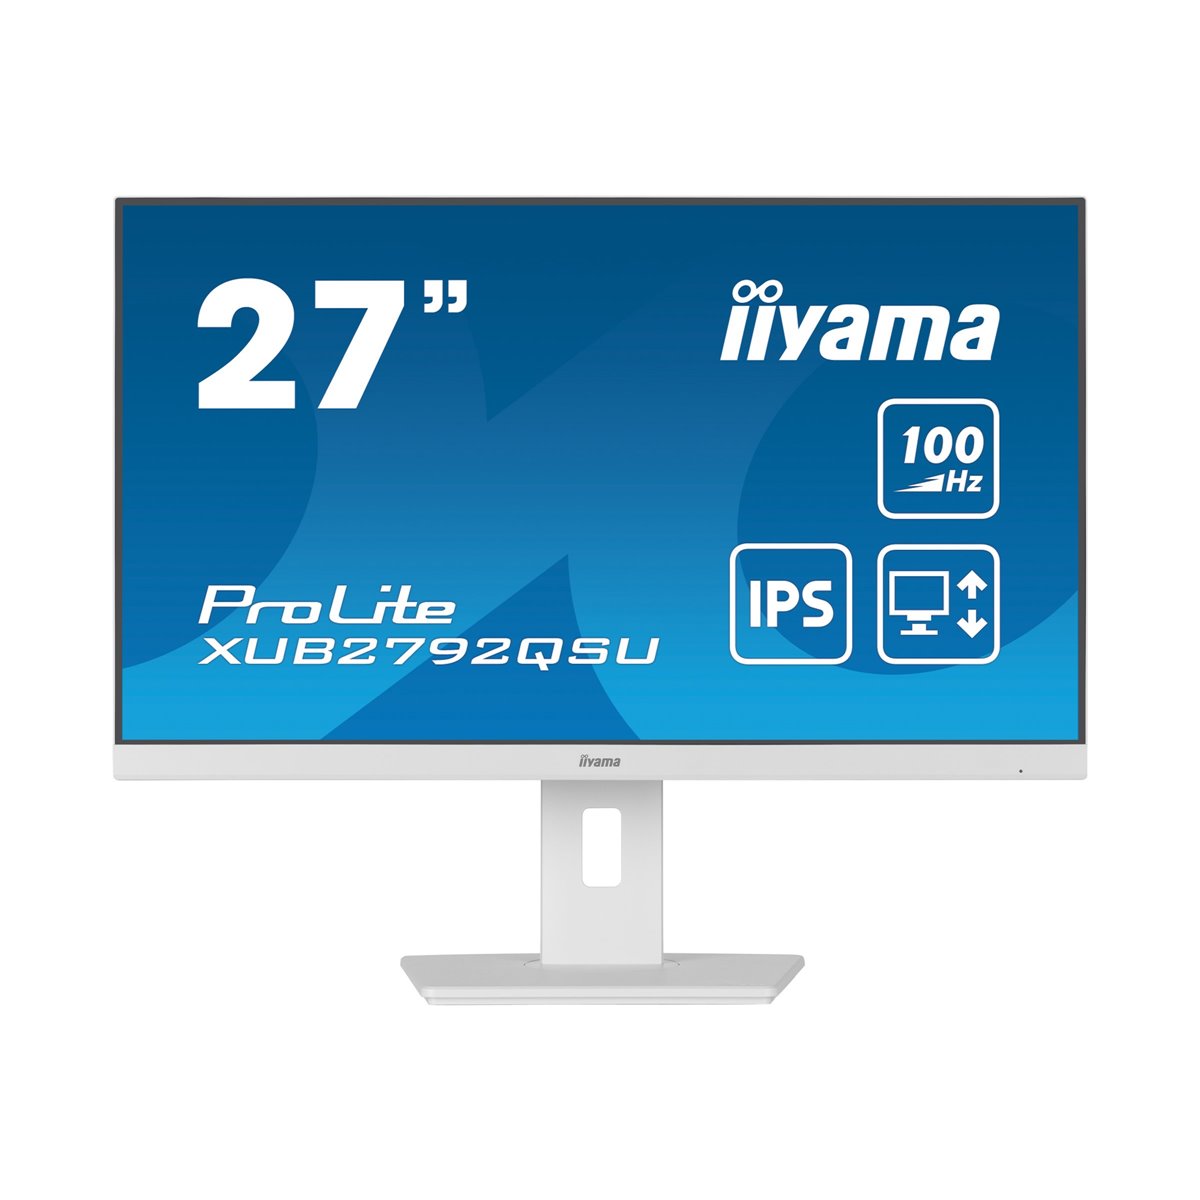 Iiyama 27 LCD Business WQHD IPS - Flat Screen - 27